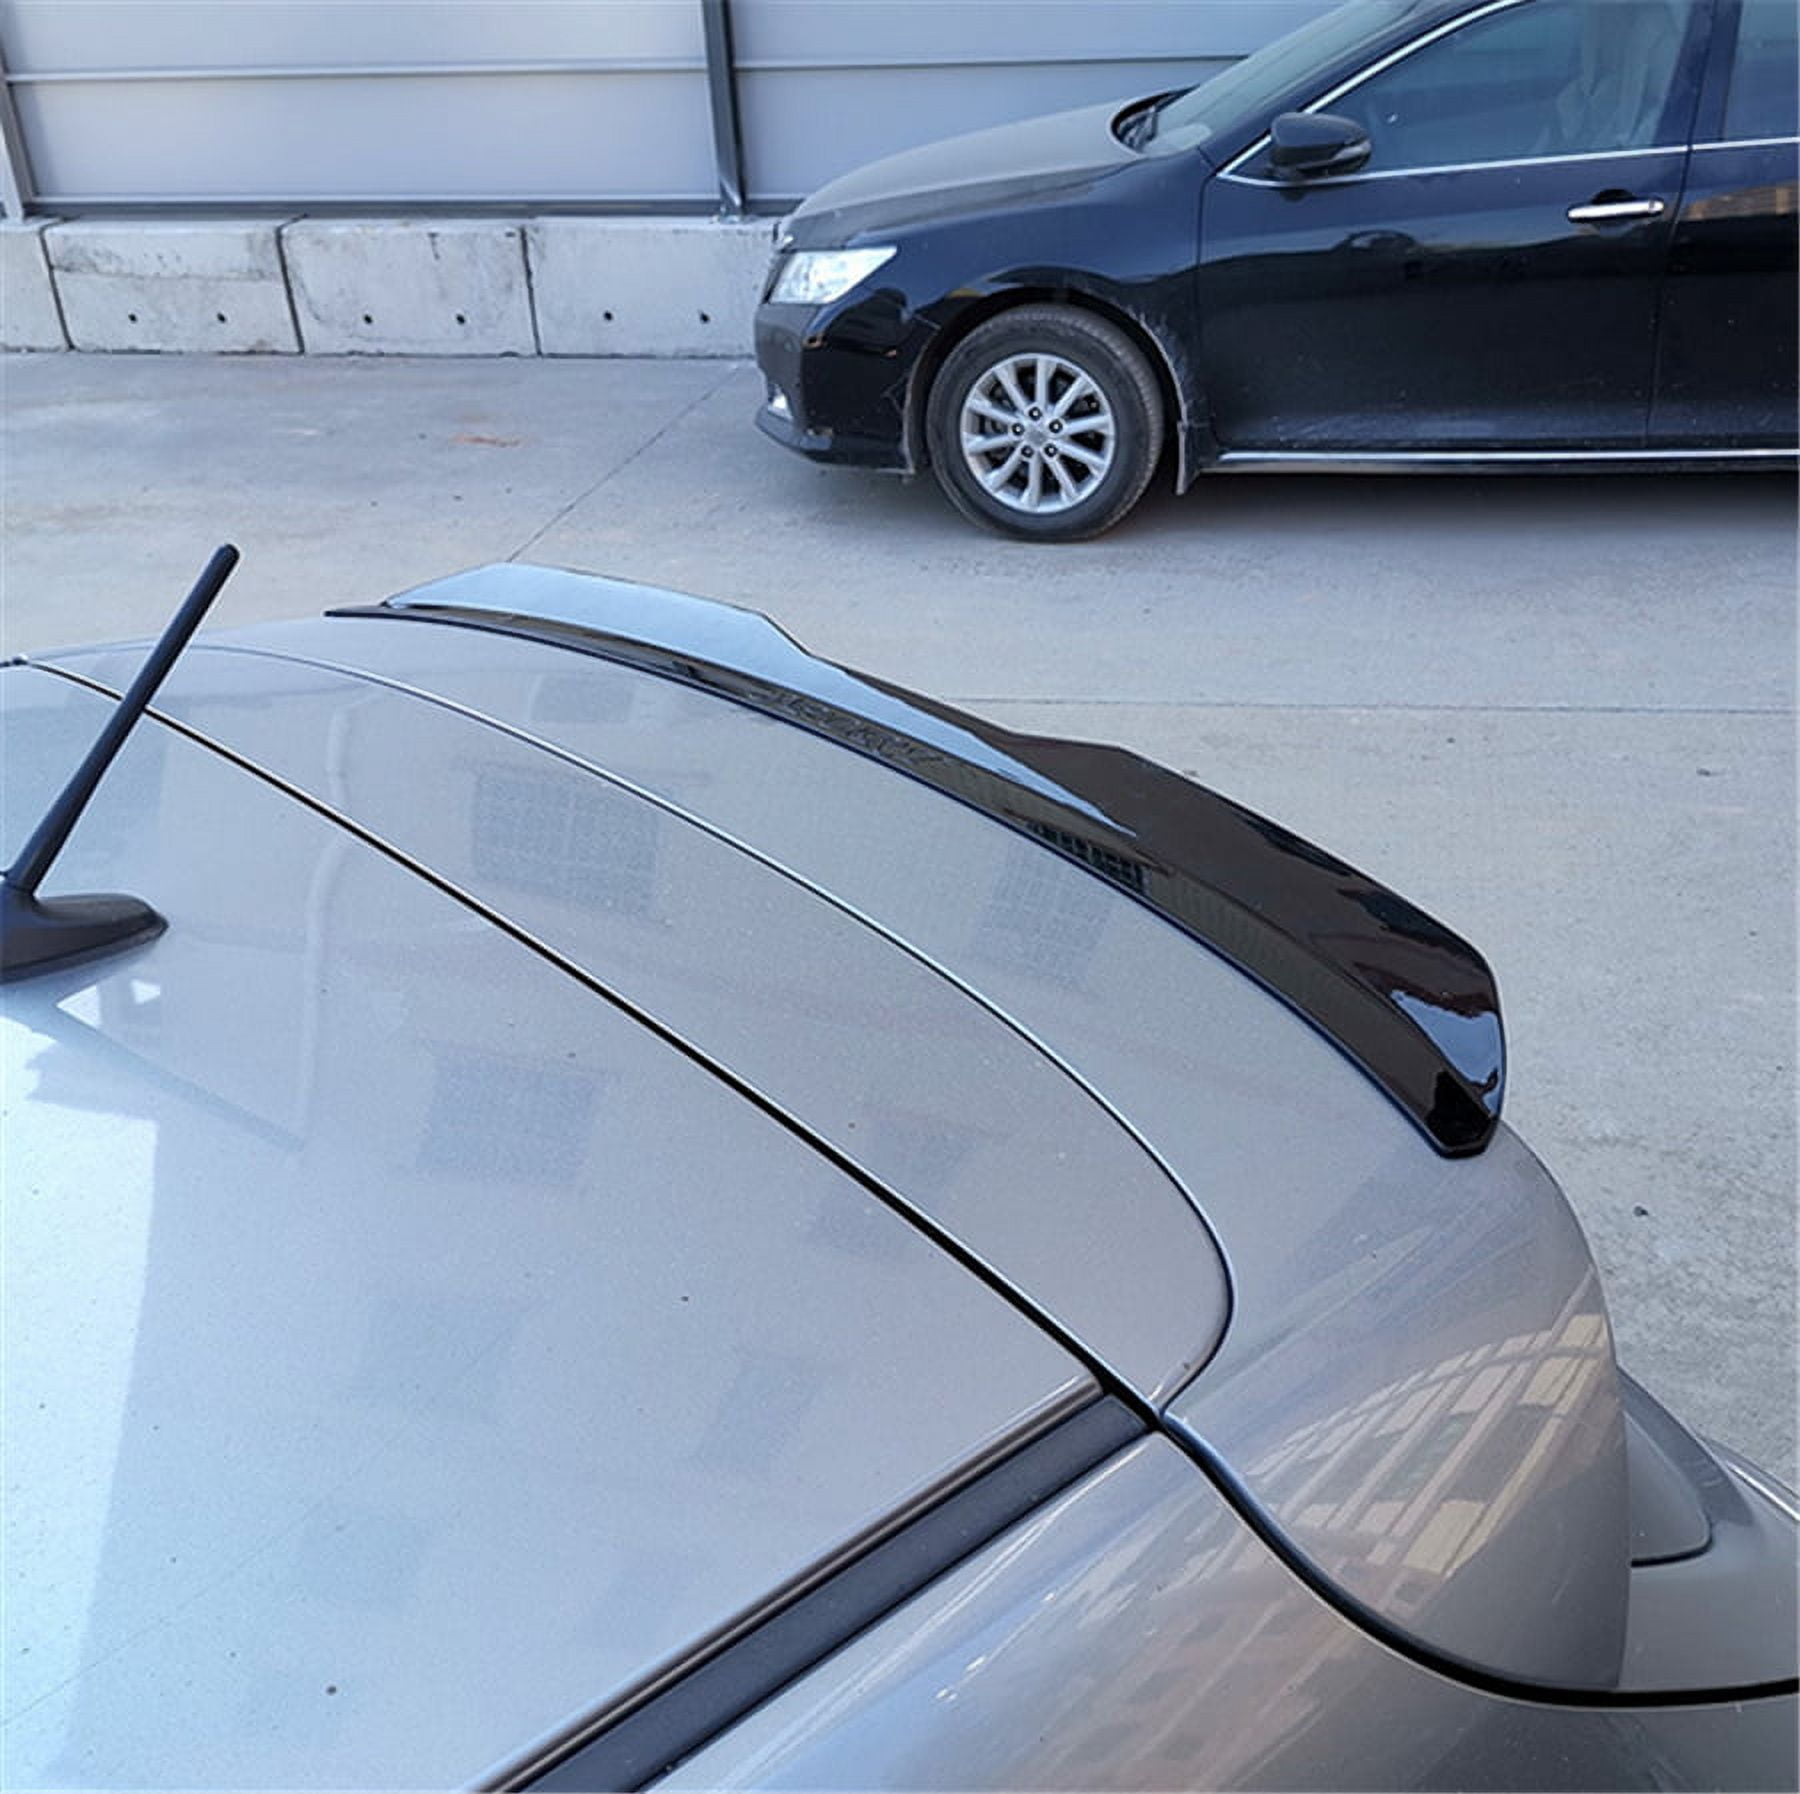 Universal Mini Spoiler Car Auto Tail Decoration Spoiler Wing Carbon Fiber 